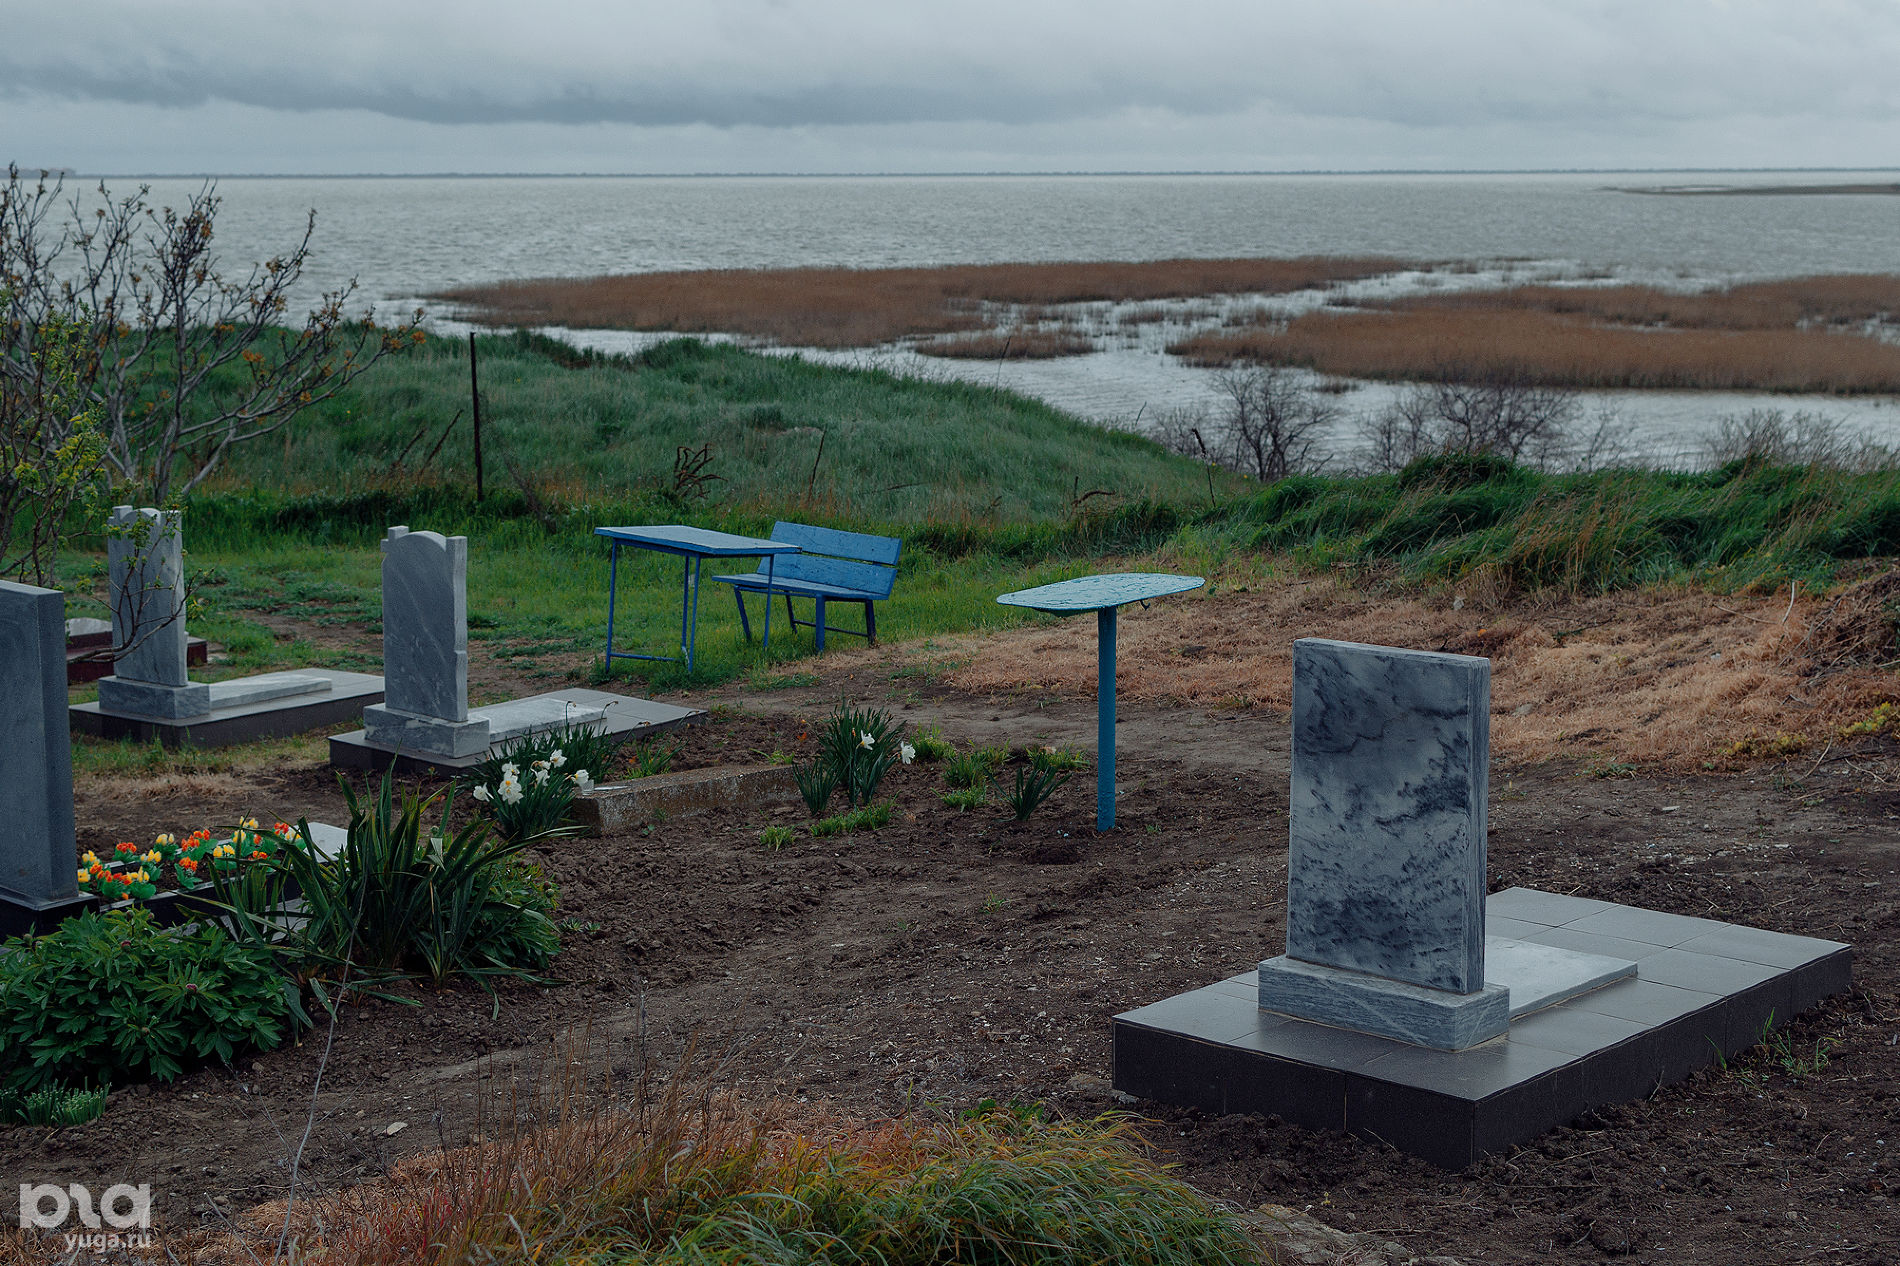 Кладбище у Витязевского лимана © Фото Юли Шафаростовой, Юга.ру